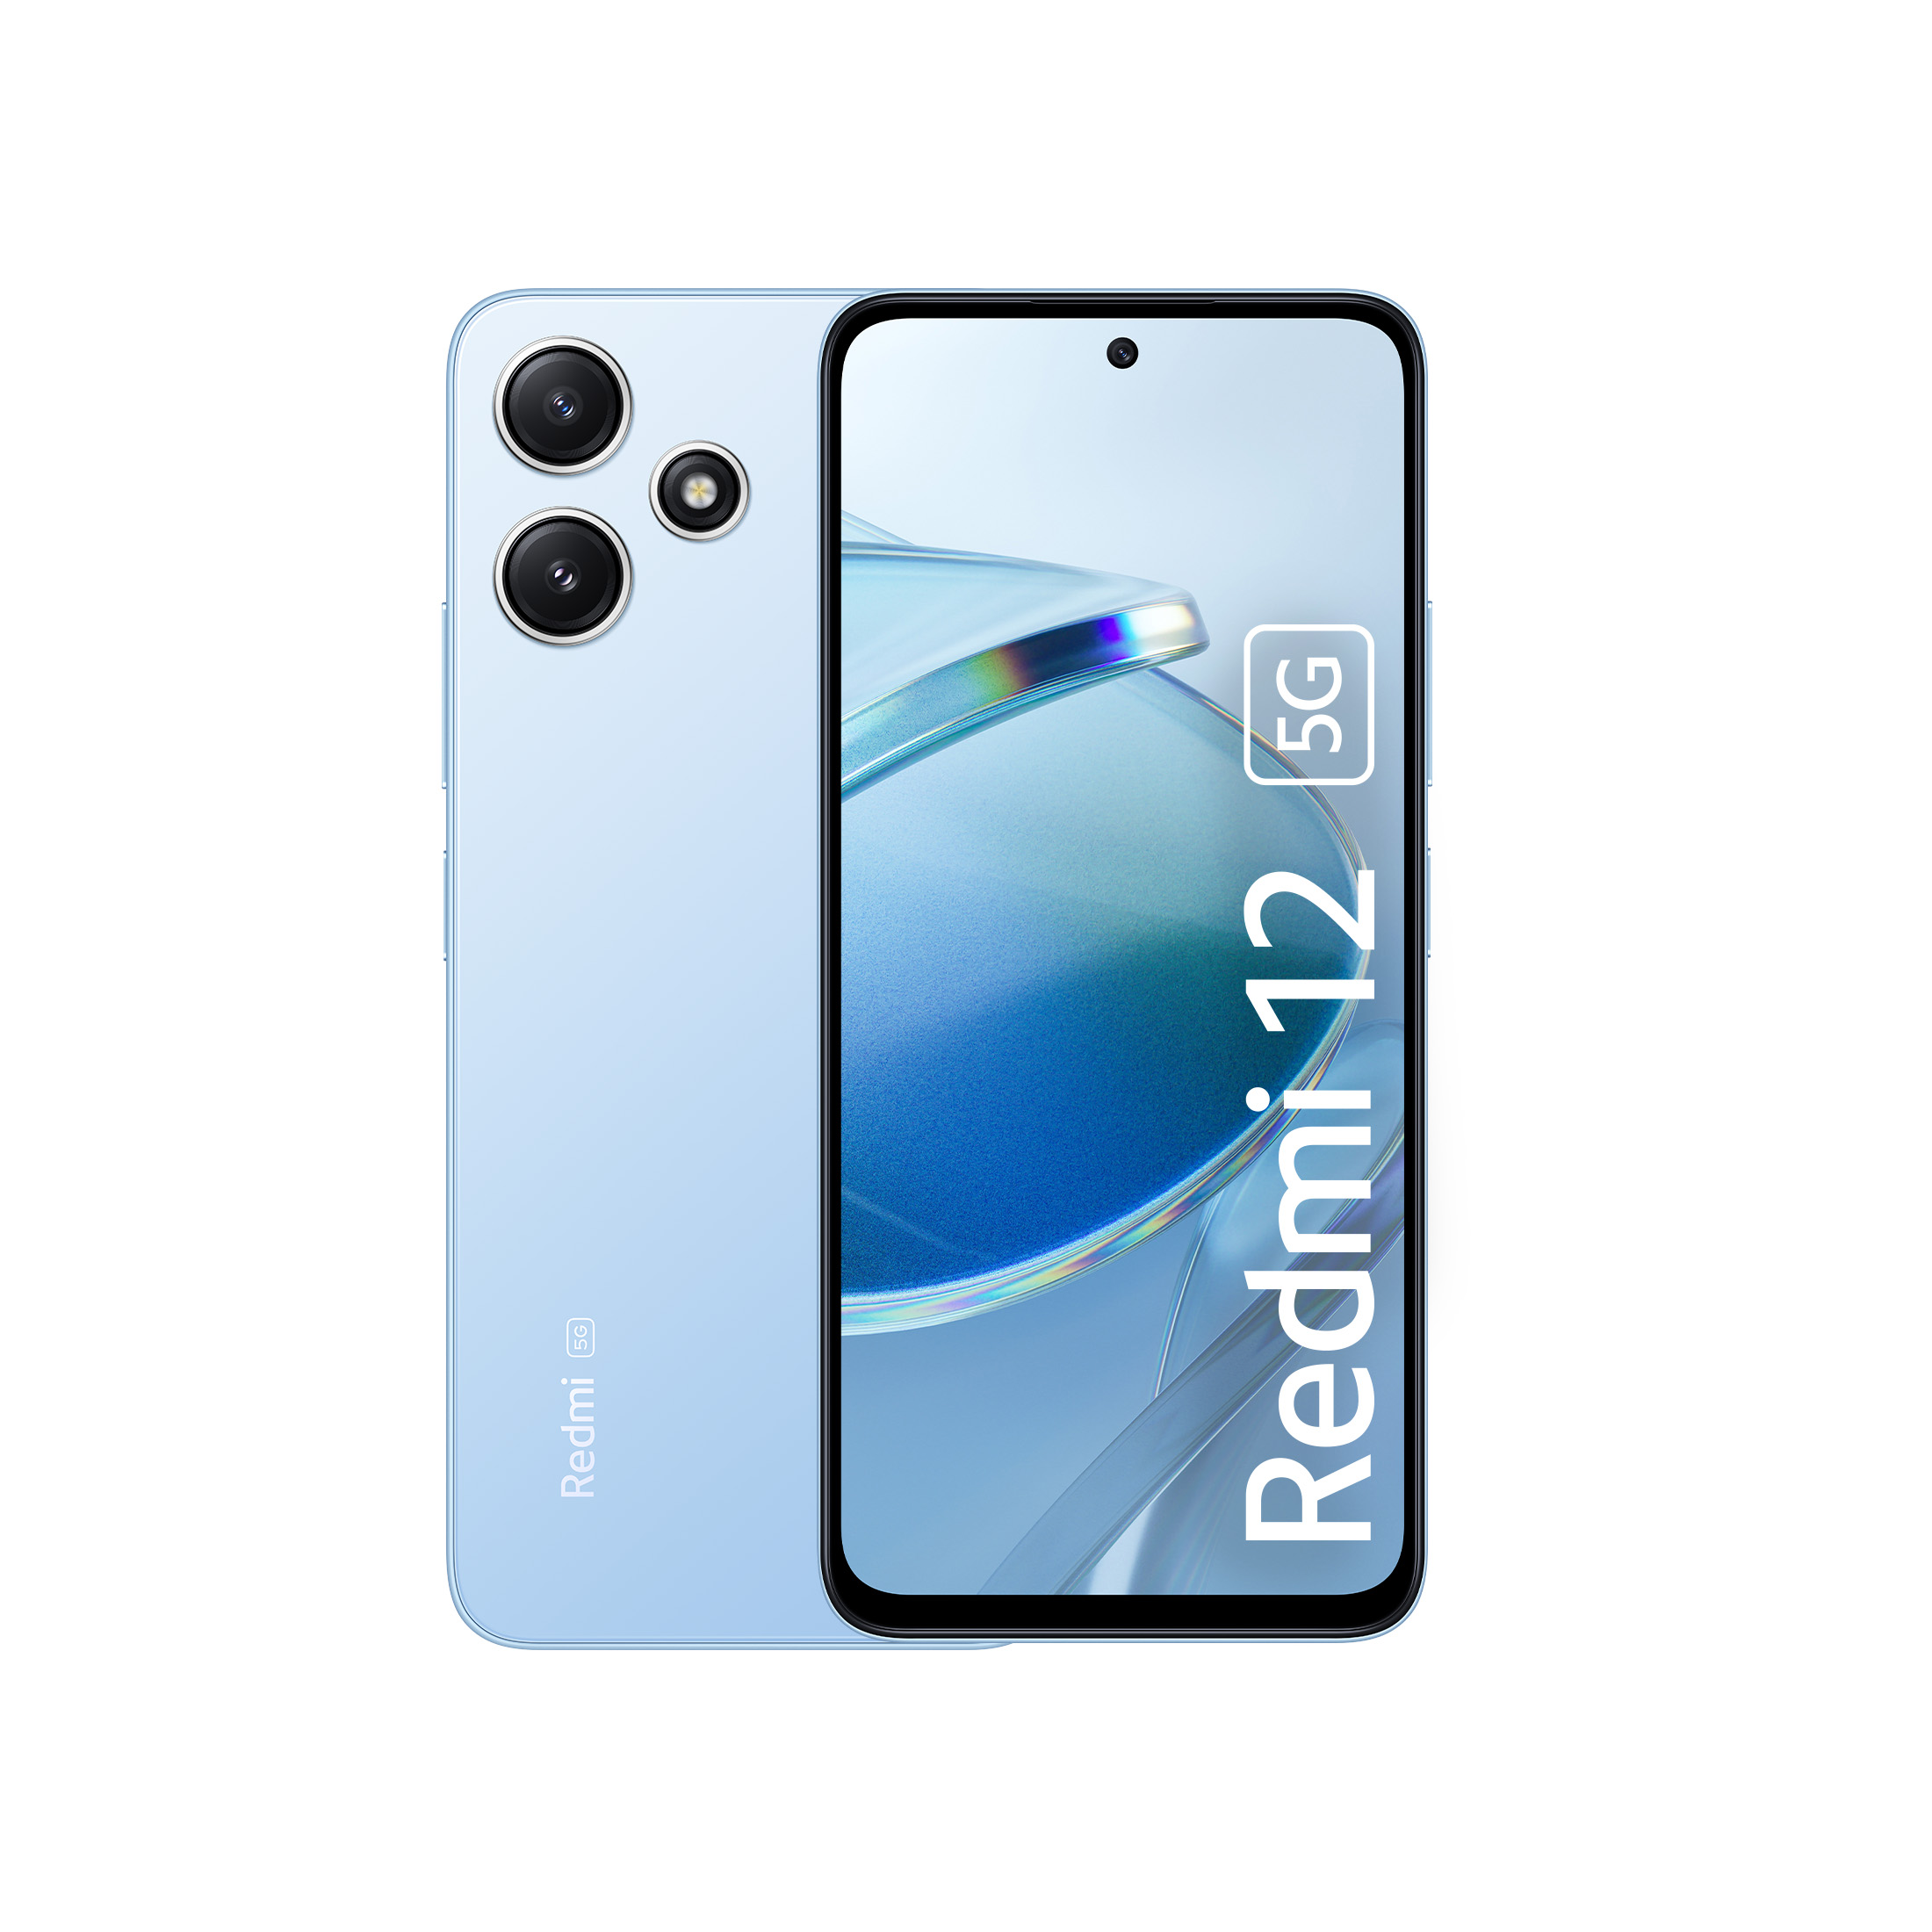 Xiaomi Redmi 12C - Full phone specifications